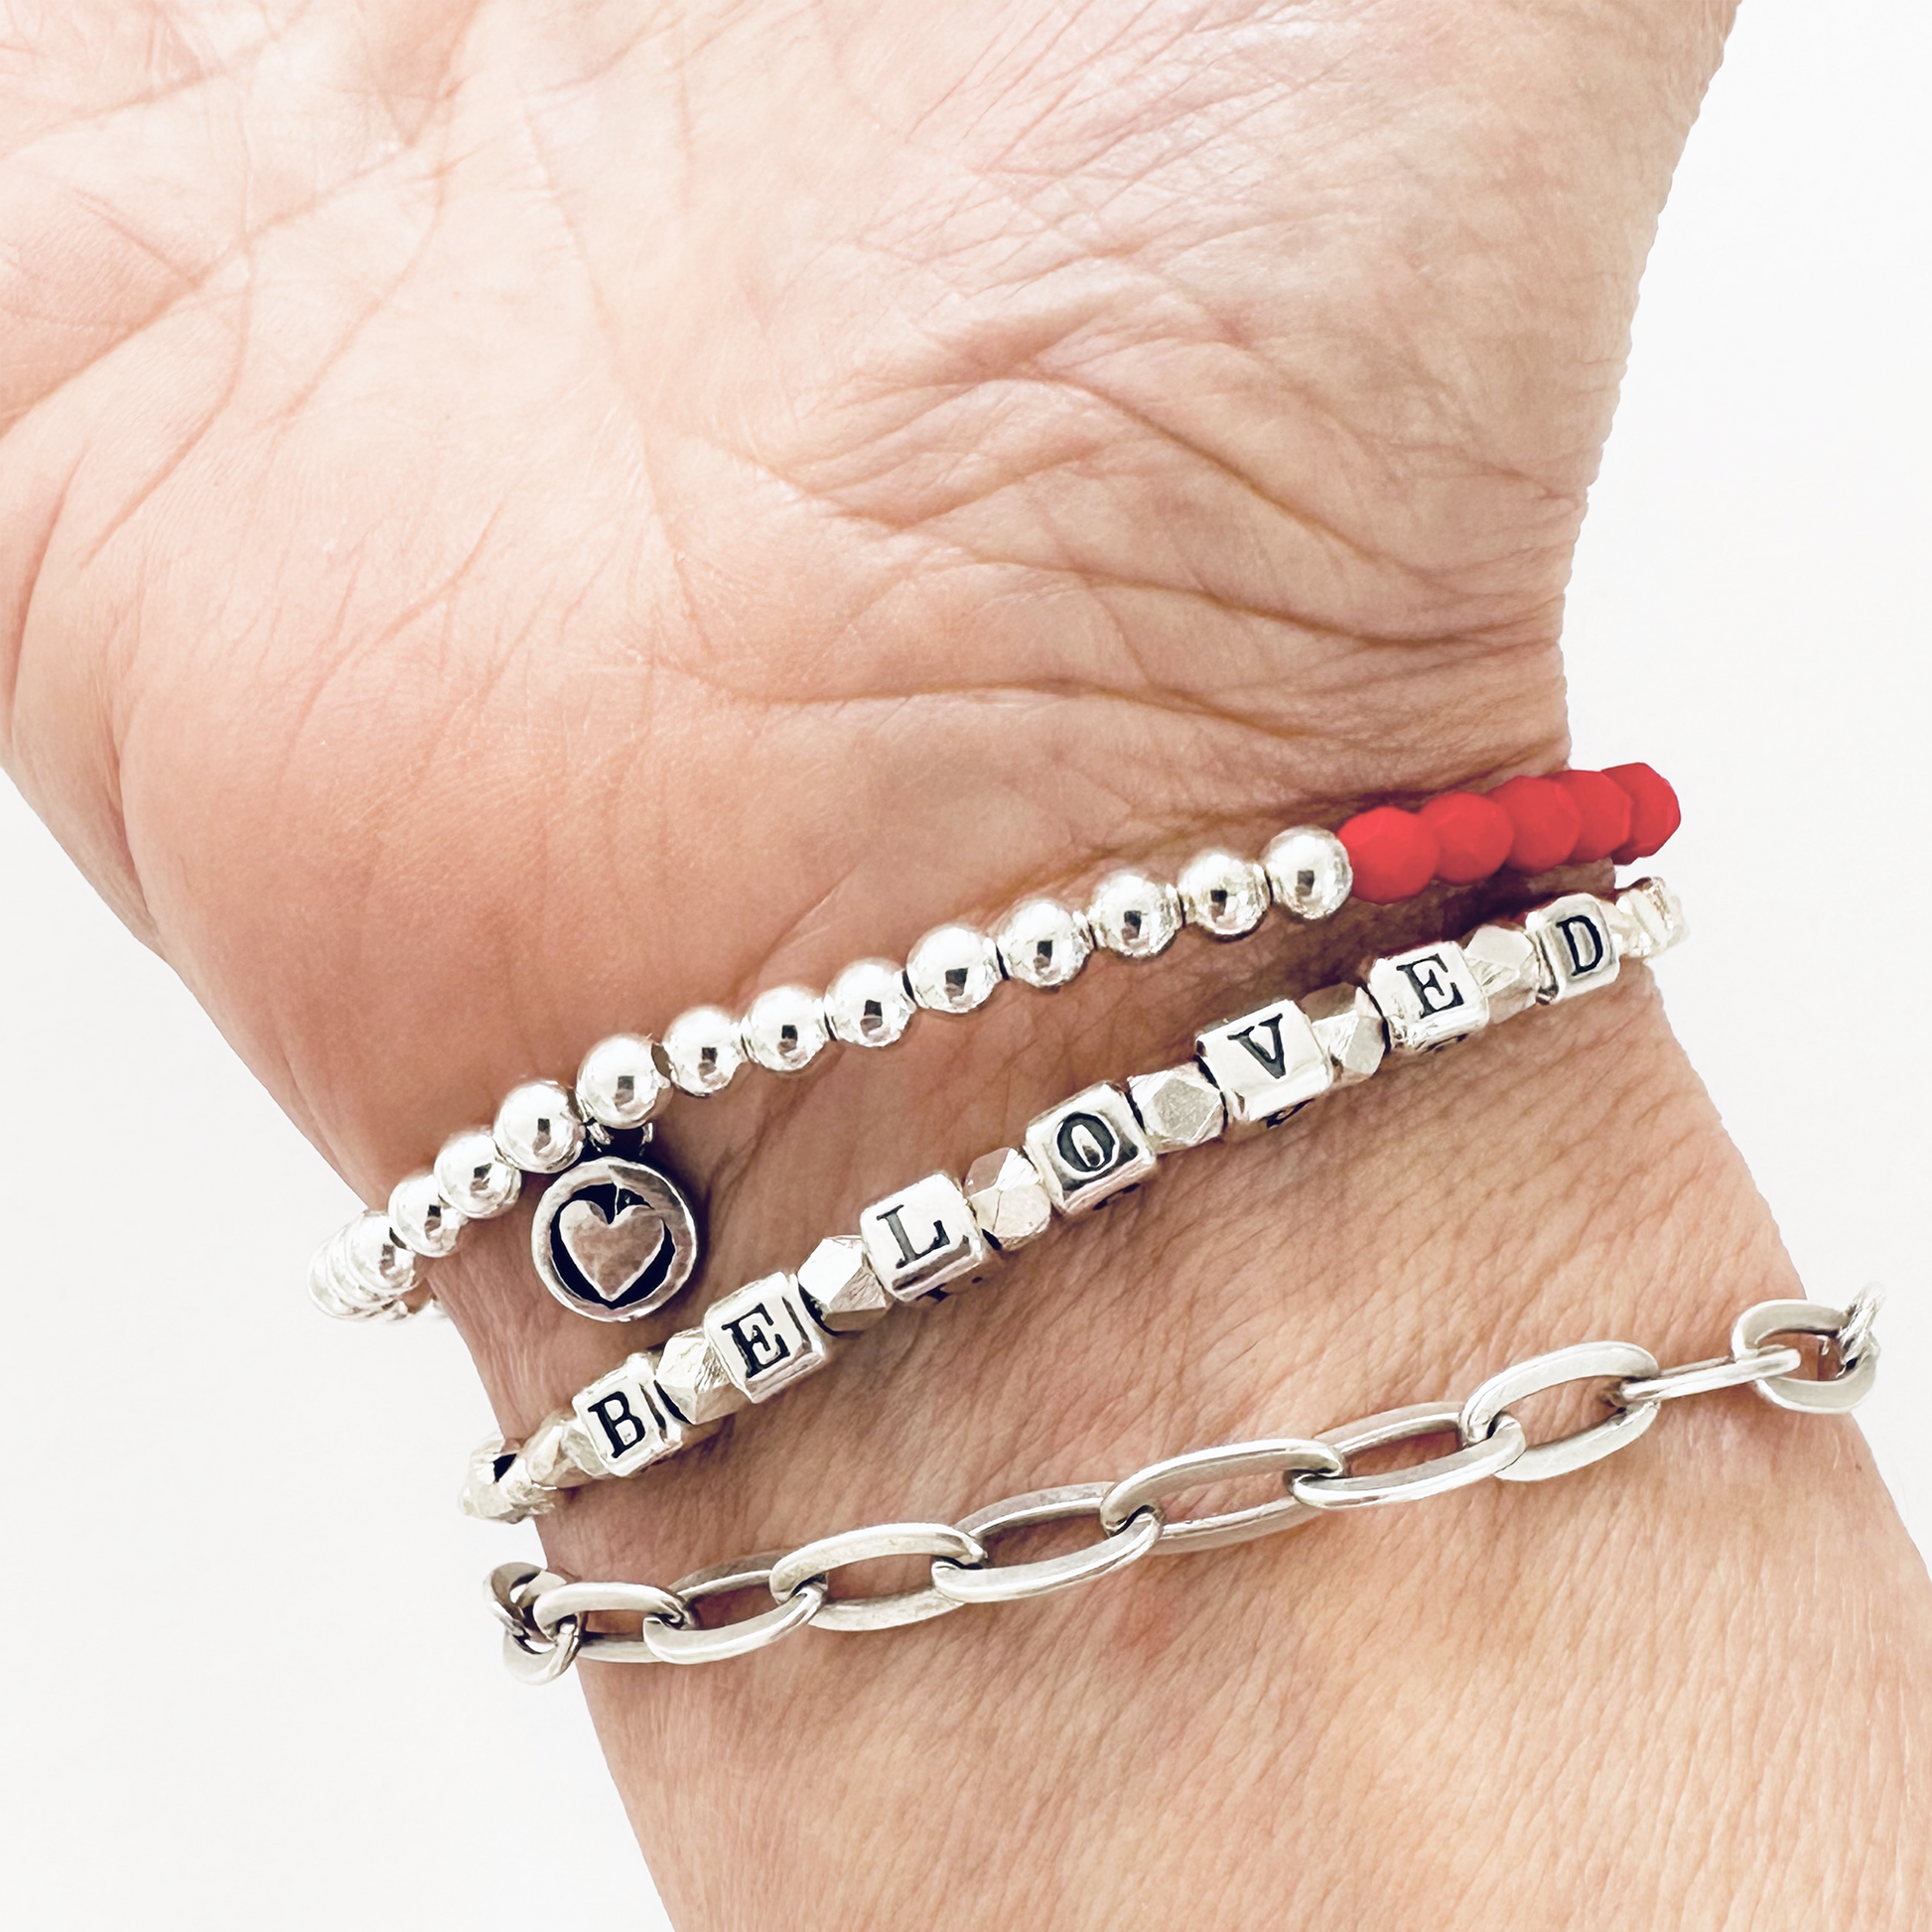 Beloved Love Bracelet in sterling silver and red beaded bracelet, shown on woman's wrist